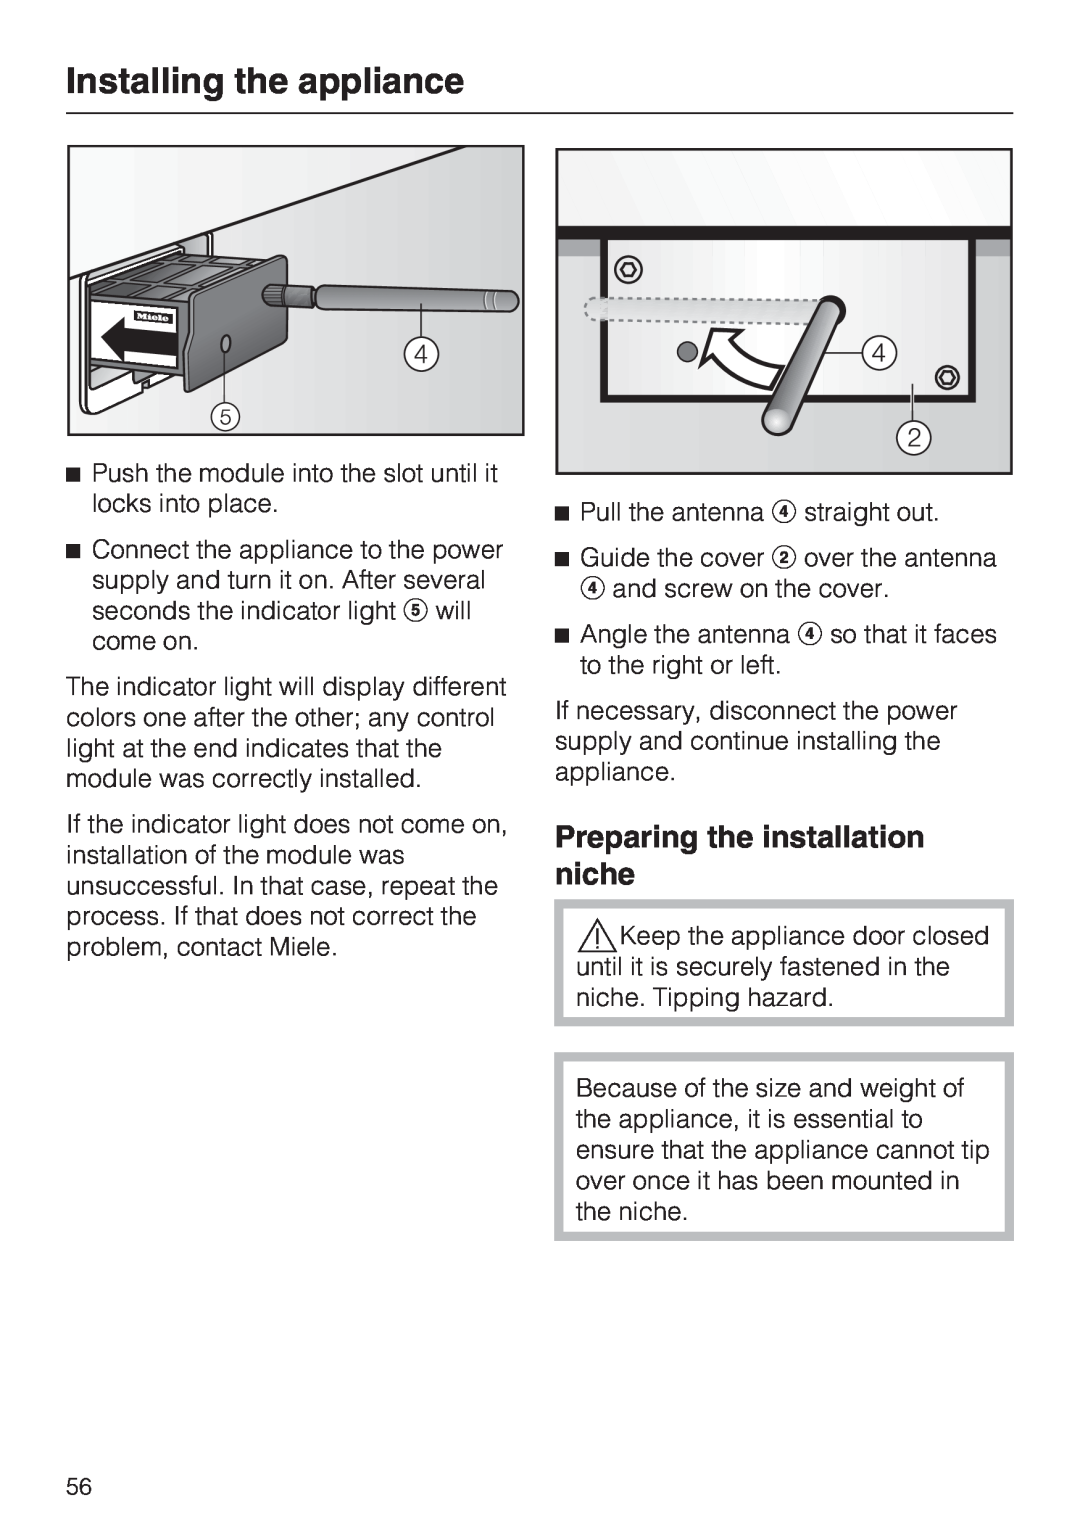 Miele F 1411 Vi installation instructions Preparing the installation niche, Installing the appliance 